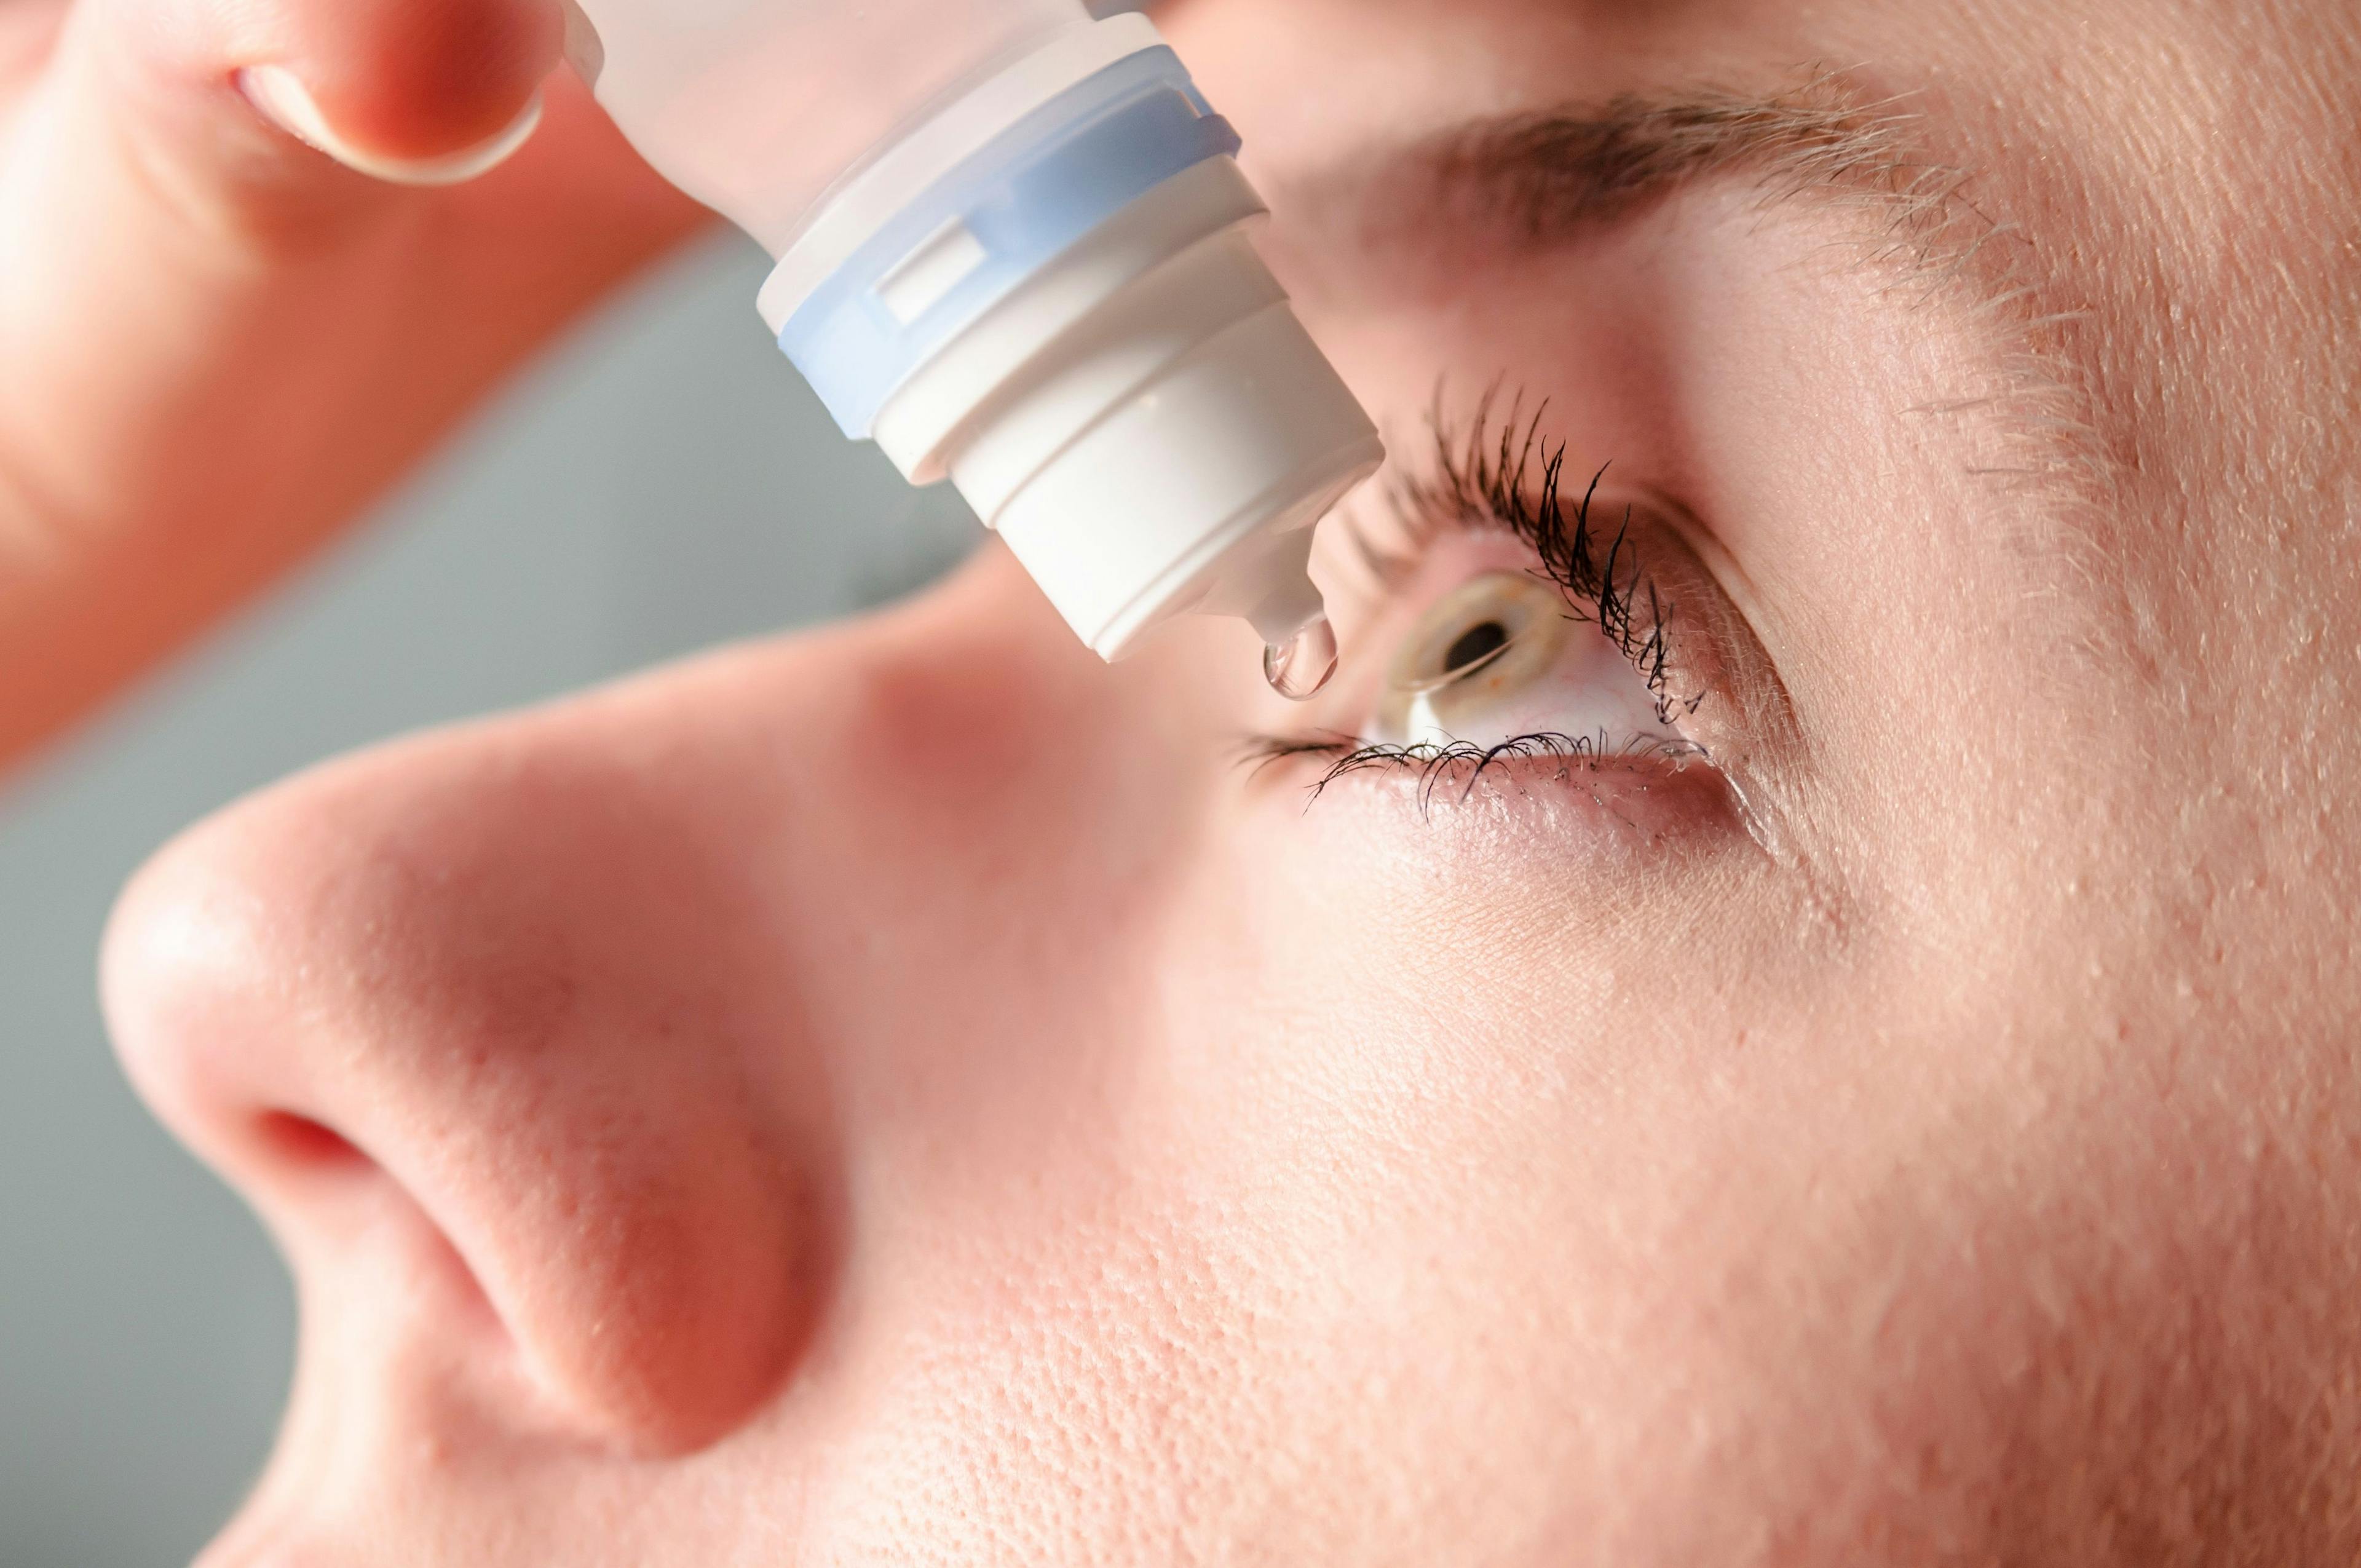 Woman applying eye drops to dry eyes | Image credit: Dragana Gordic - stock.adobe.com